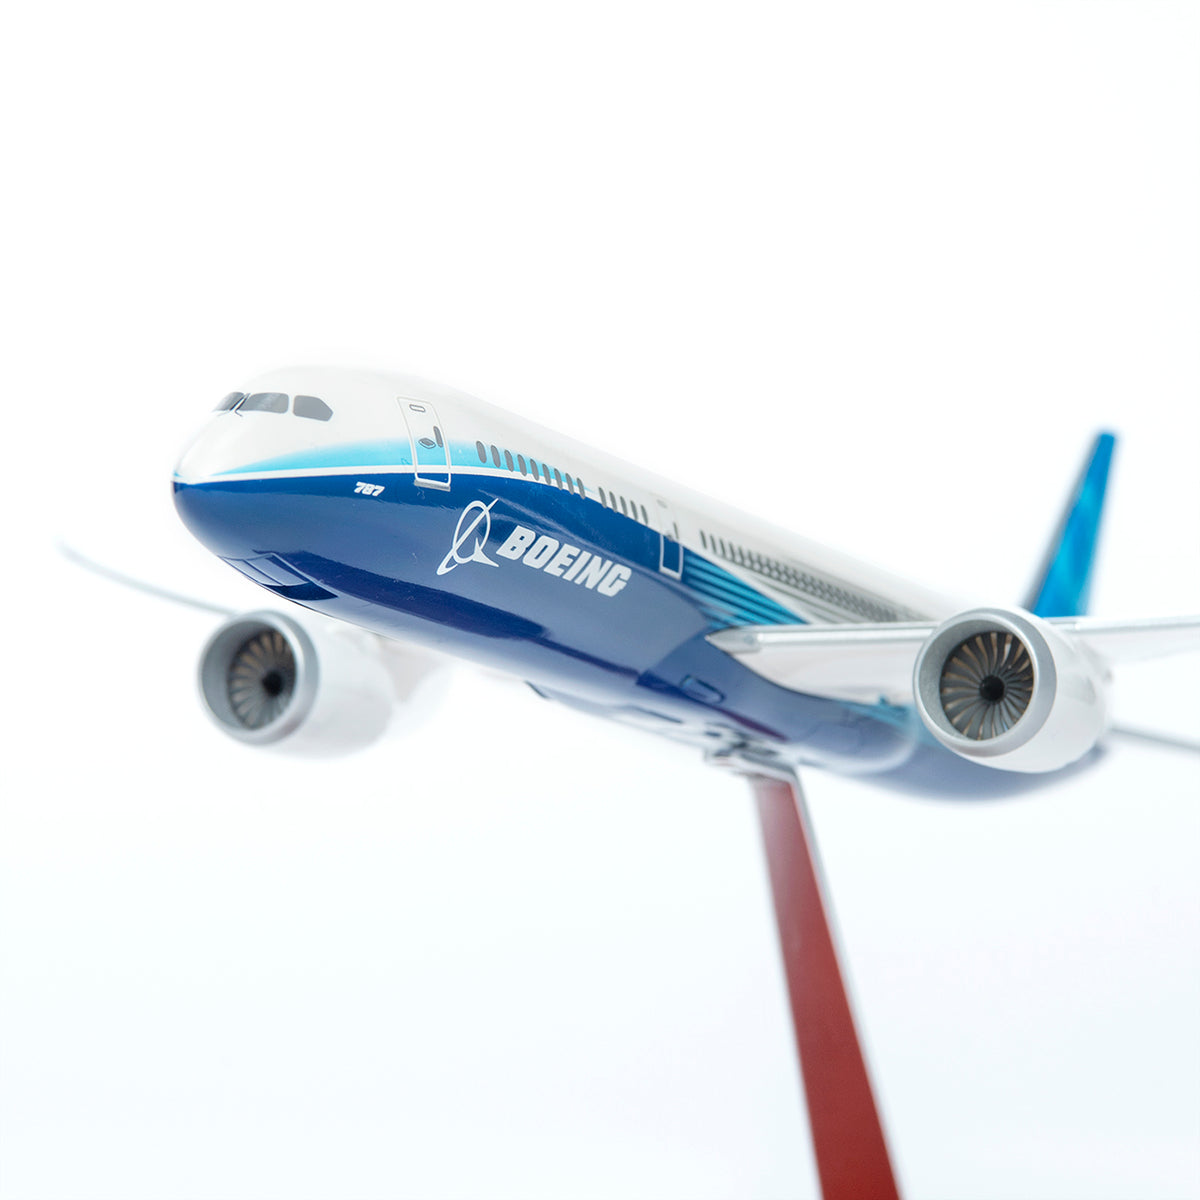 Details about   Solid WINGO DREAM LINER BOEING 787 Passenger Airplane Metal Plane Diecast Model 